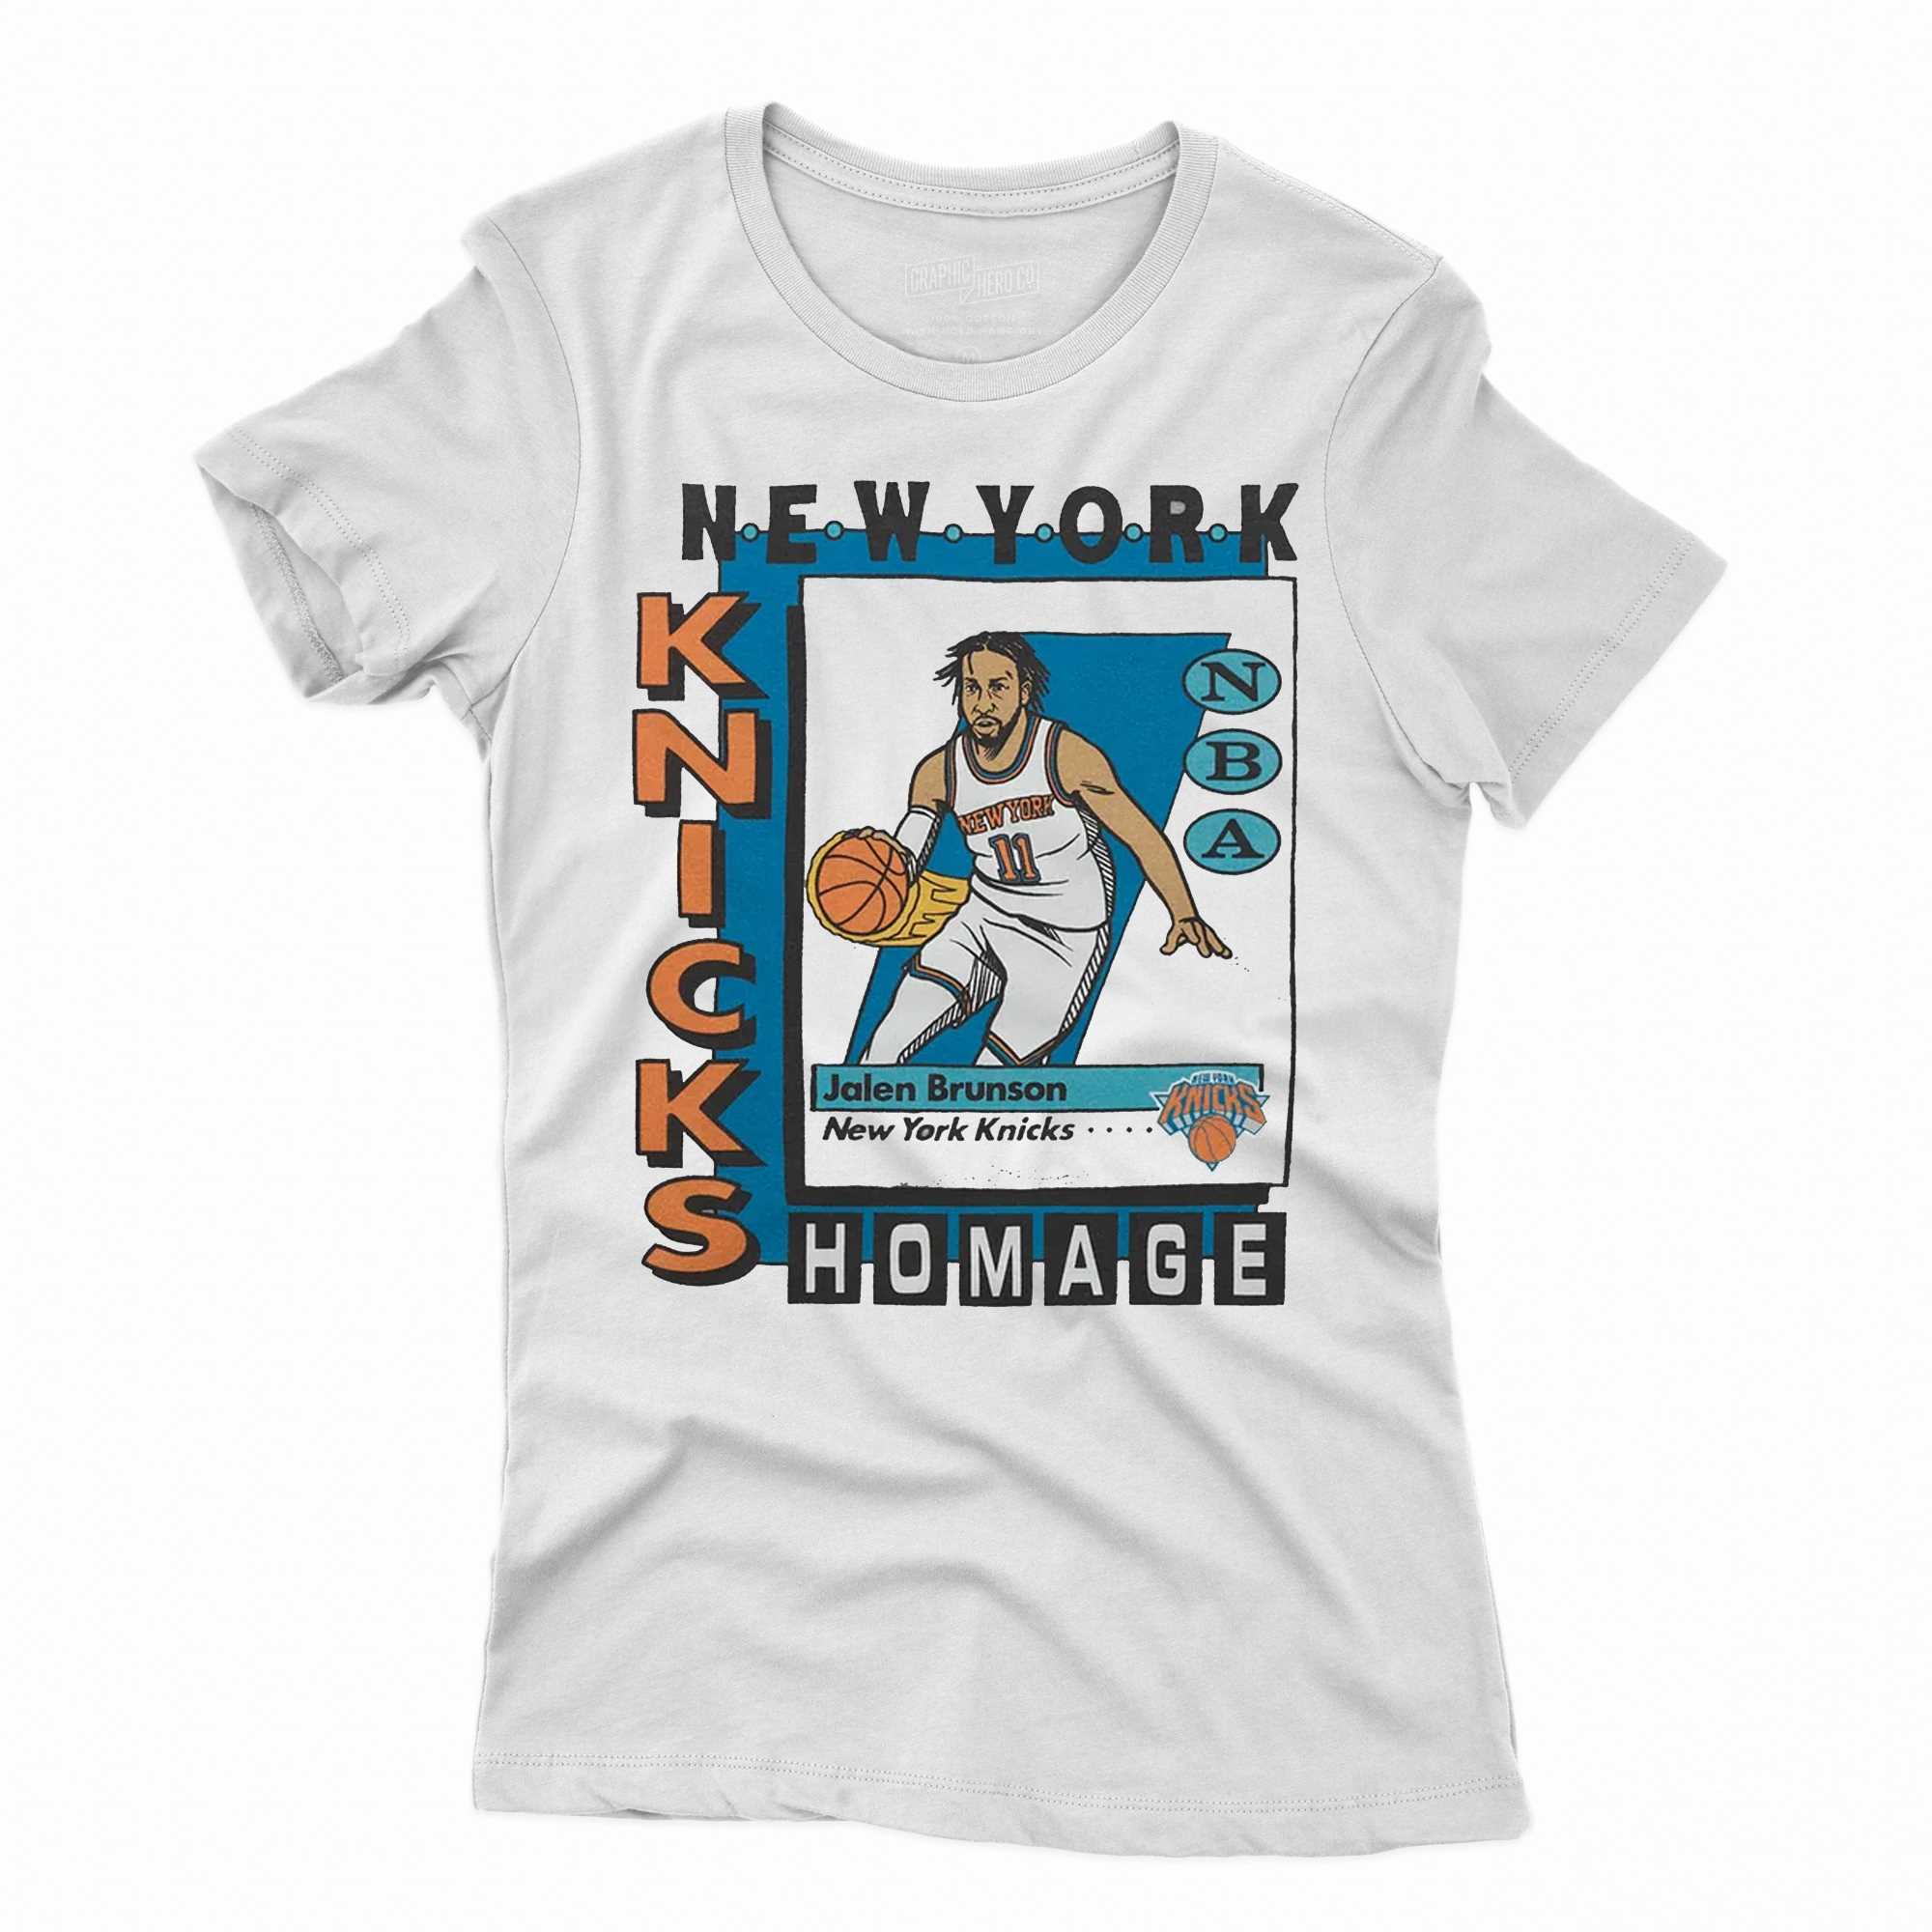 Nba Homage New York Knicks Trading Card Jalen Brunson T-Shirt